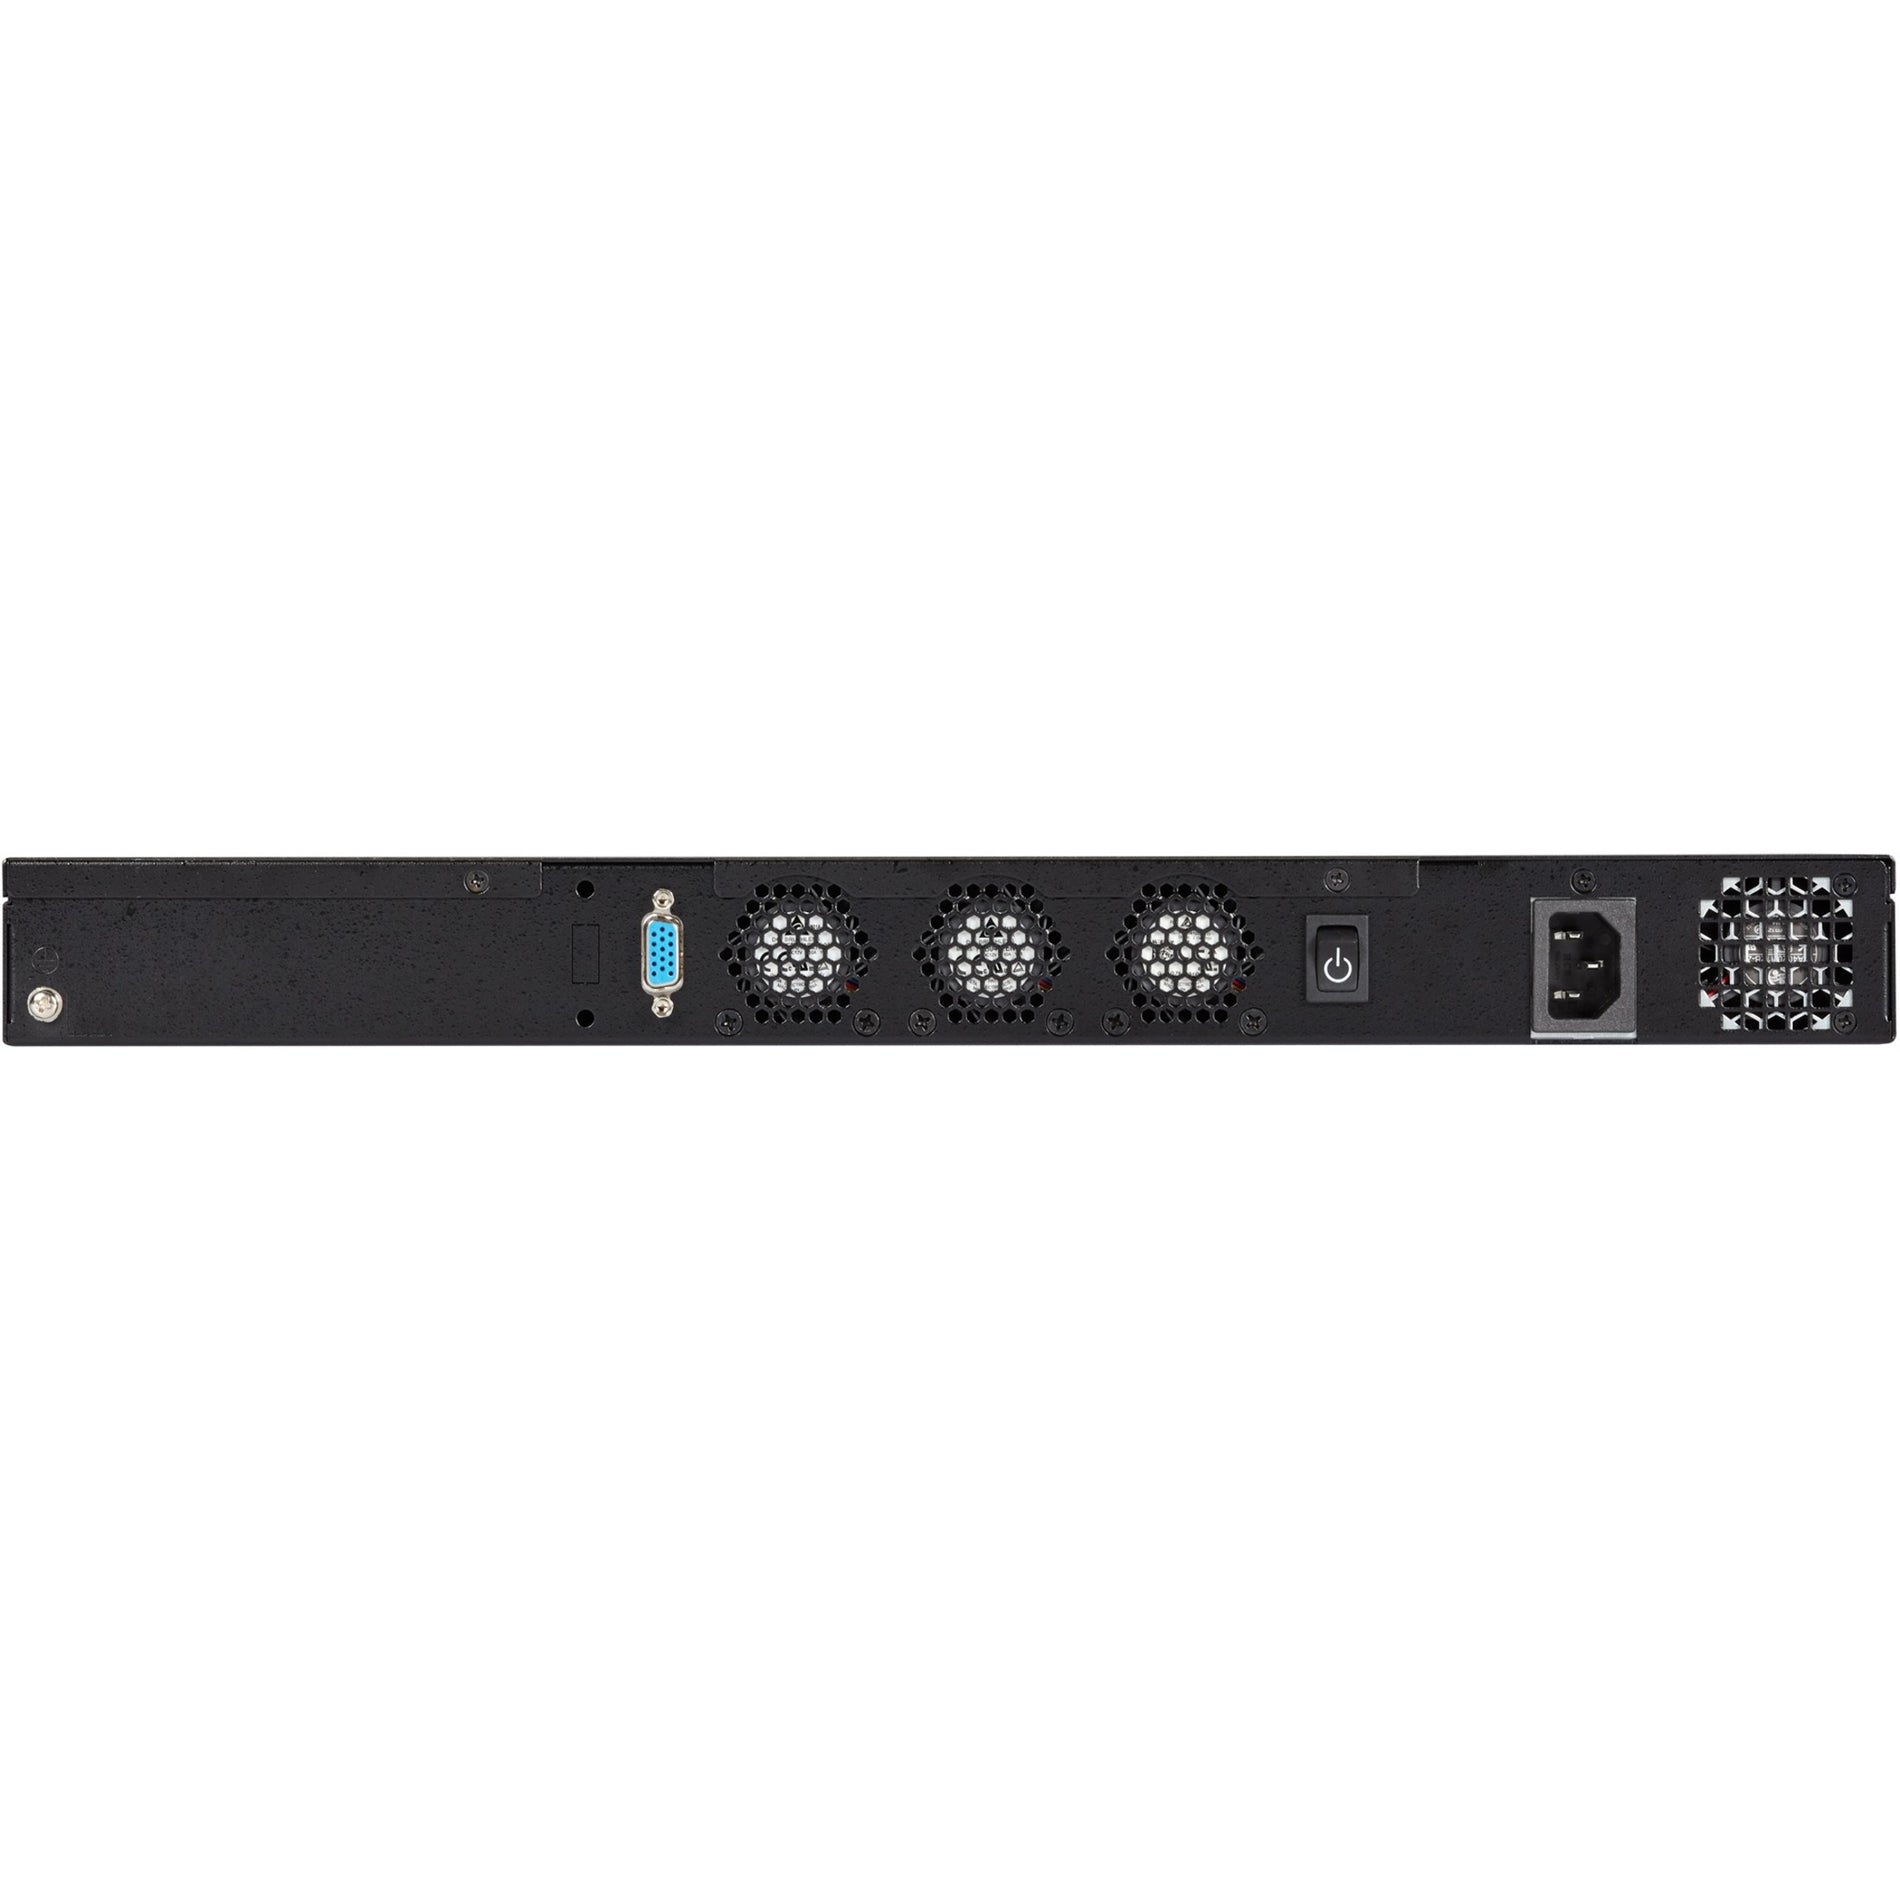 Black Box BXAMGR-R2 Boxilla KVM Manager with 25-Device License, USB 2.0, 2 USB Ports, 3 Network (RJ-45) Ports